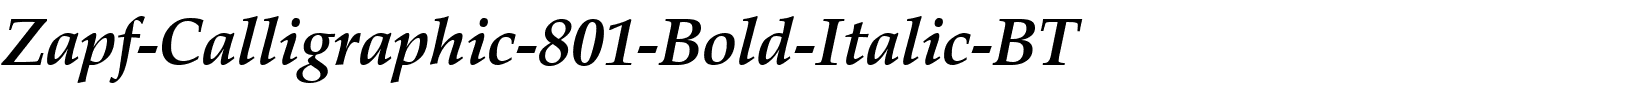 Zapf-Calligraphic-801-Bold-Italic-BT